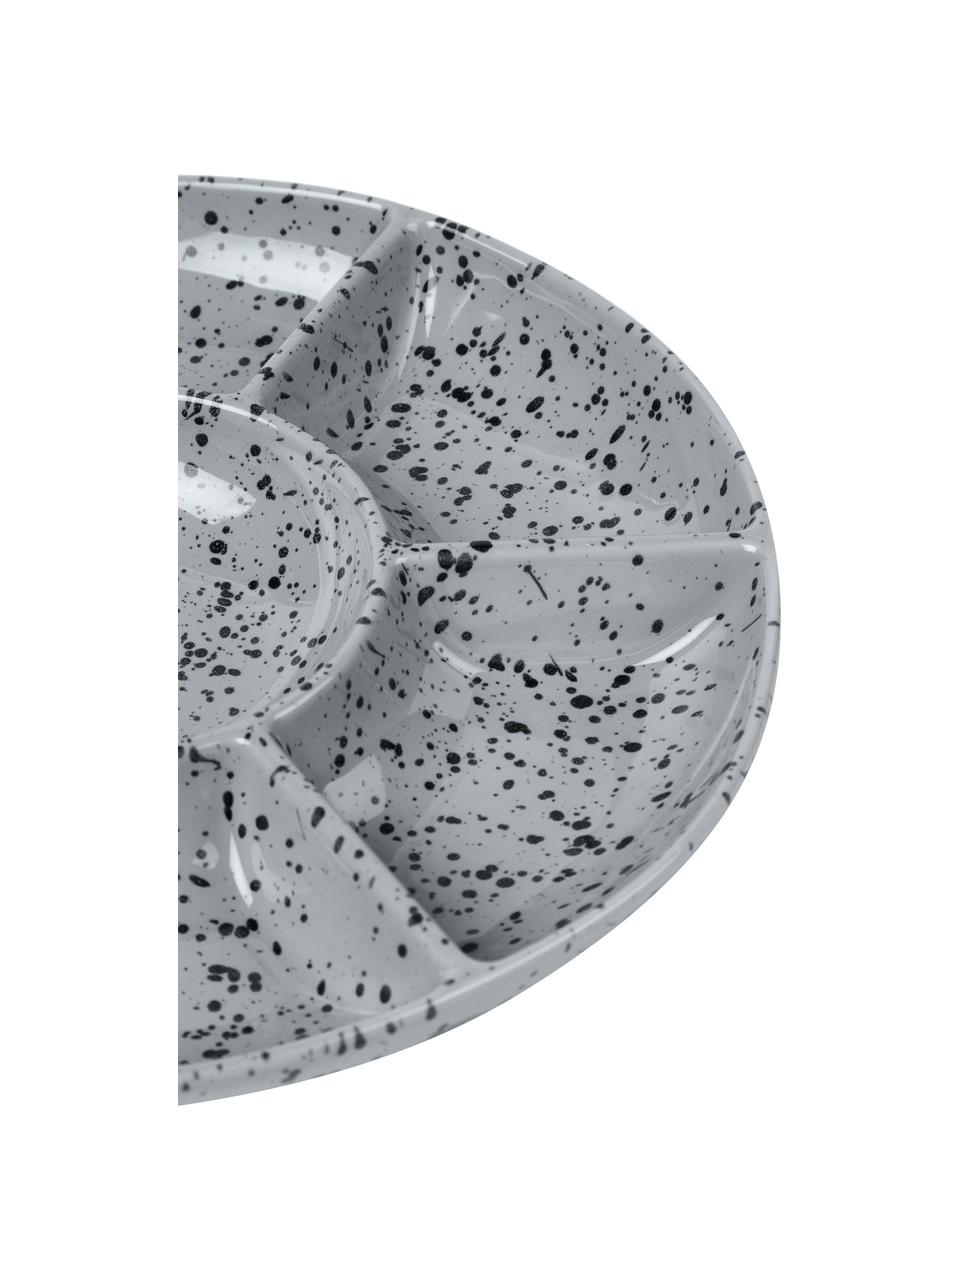 Handgemaakte serveerplateau Ditte in grijs, Keramiek, Grijs, gespikkeld, Ø 26 x H 4 cm